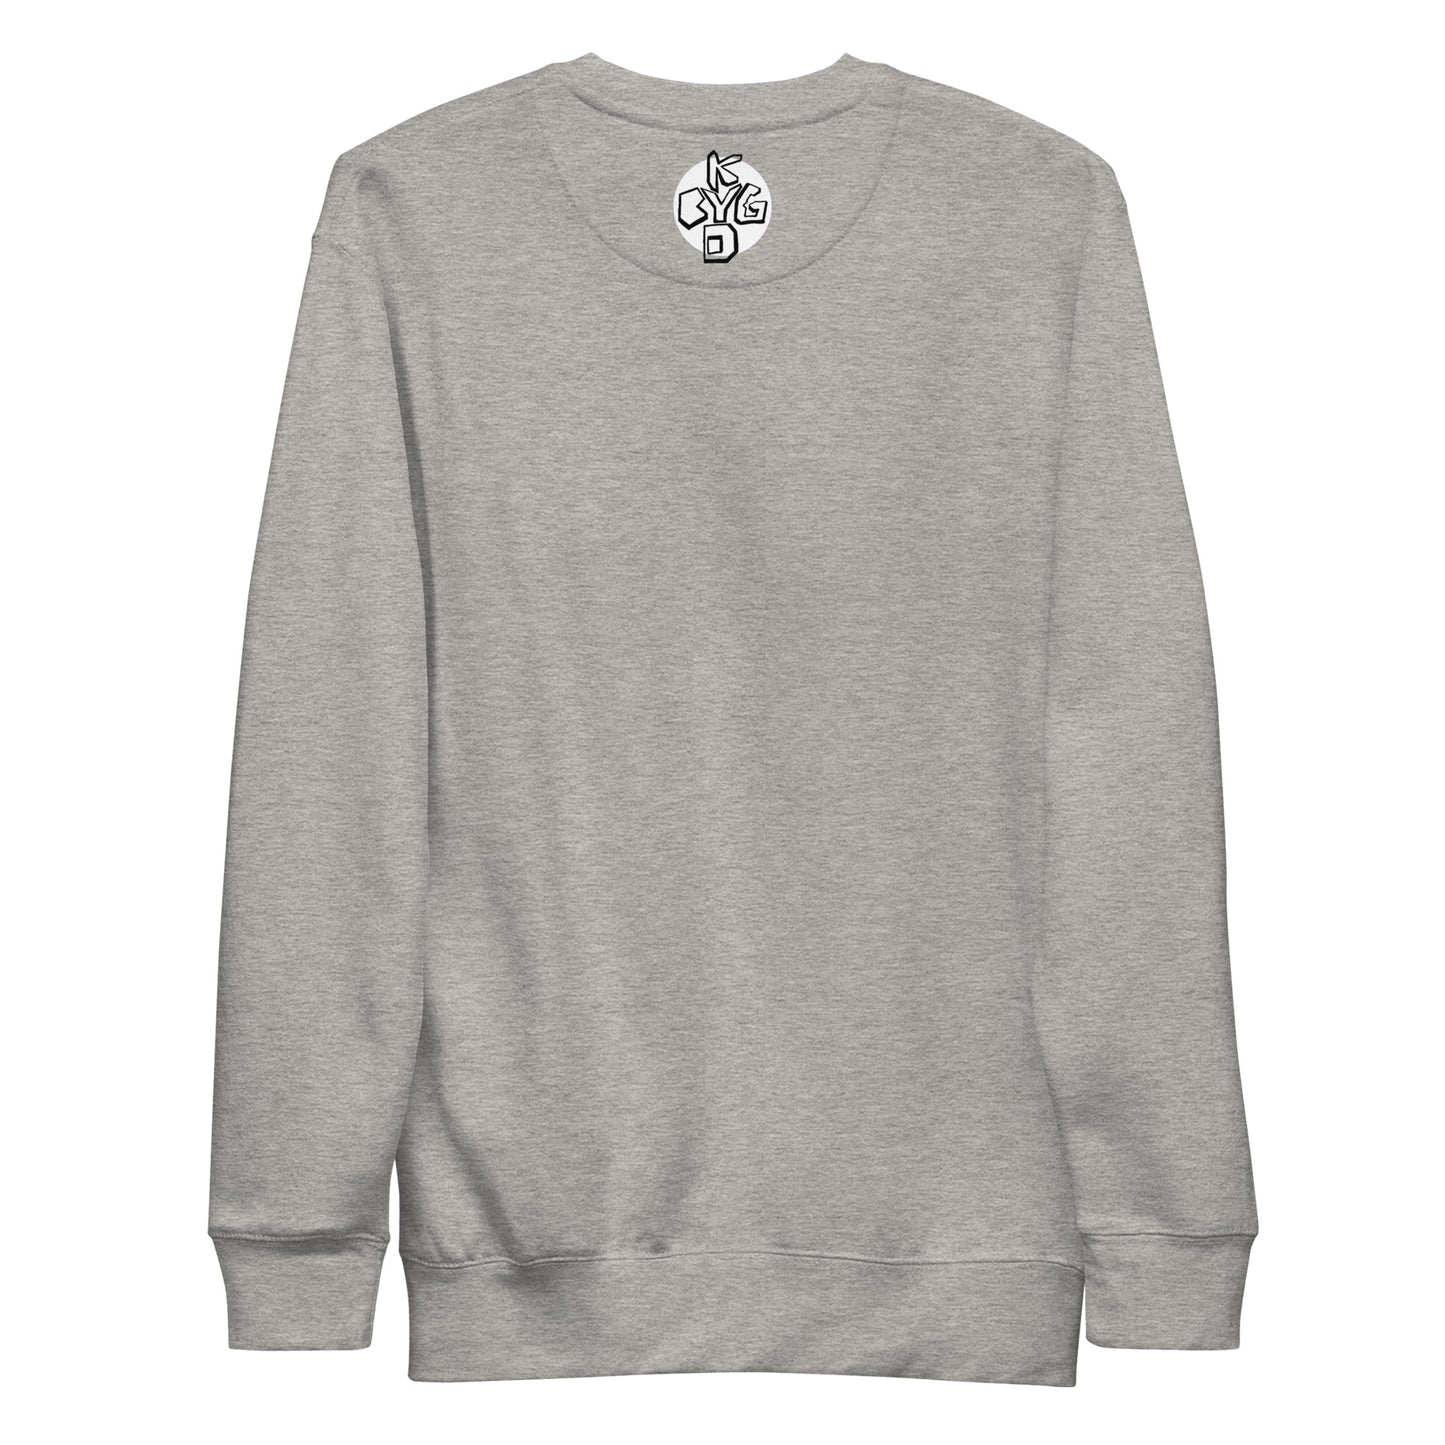 Culture/V4L - Unisex Premium Sweatshirt (S-3XL)